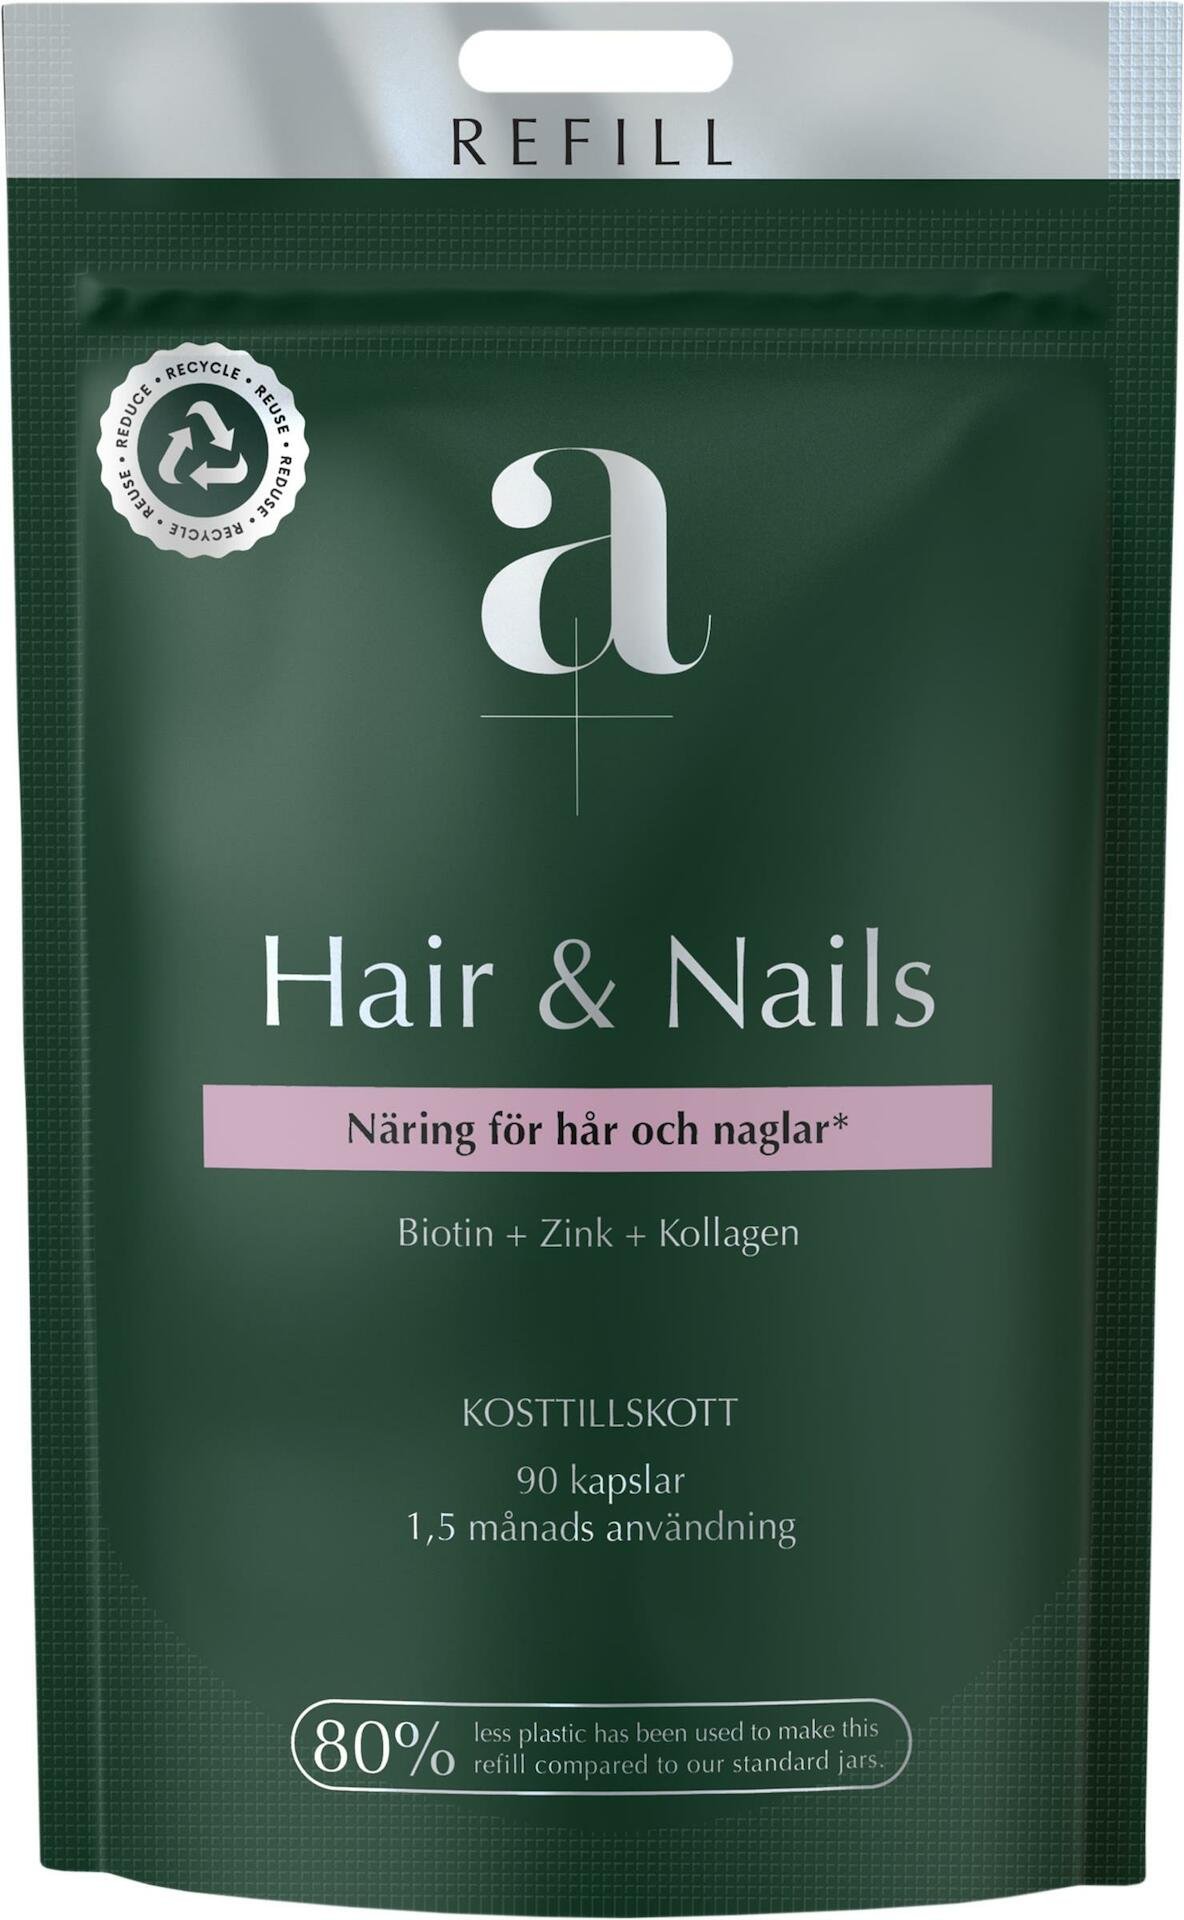 A+ Hair & Nails Refill 90 kapslar